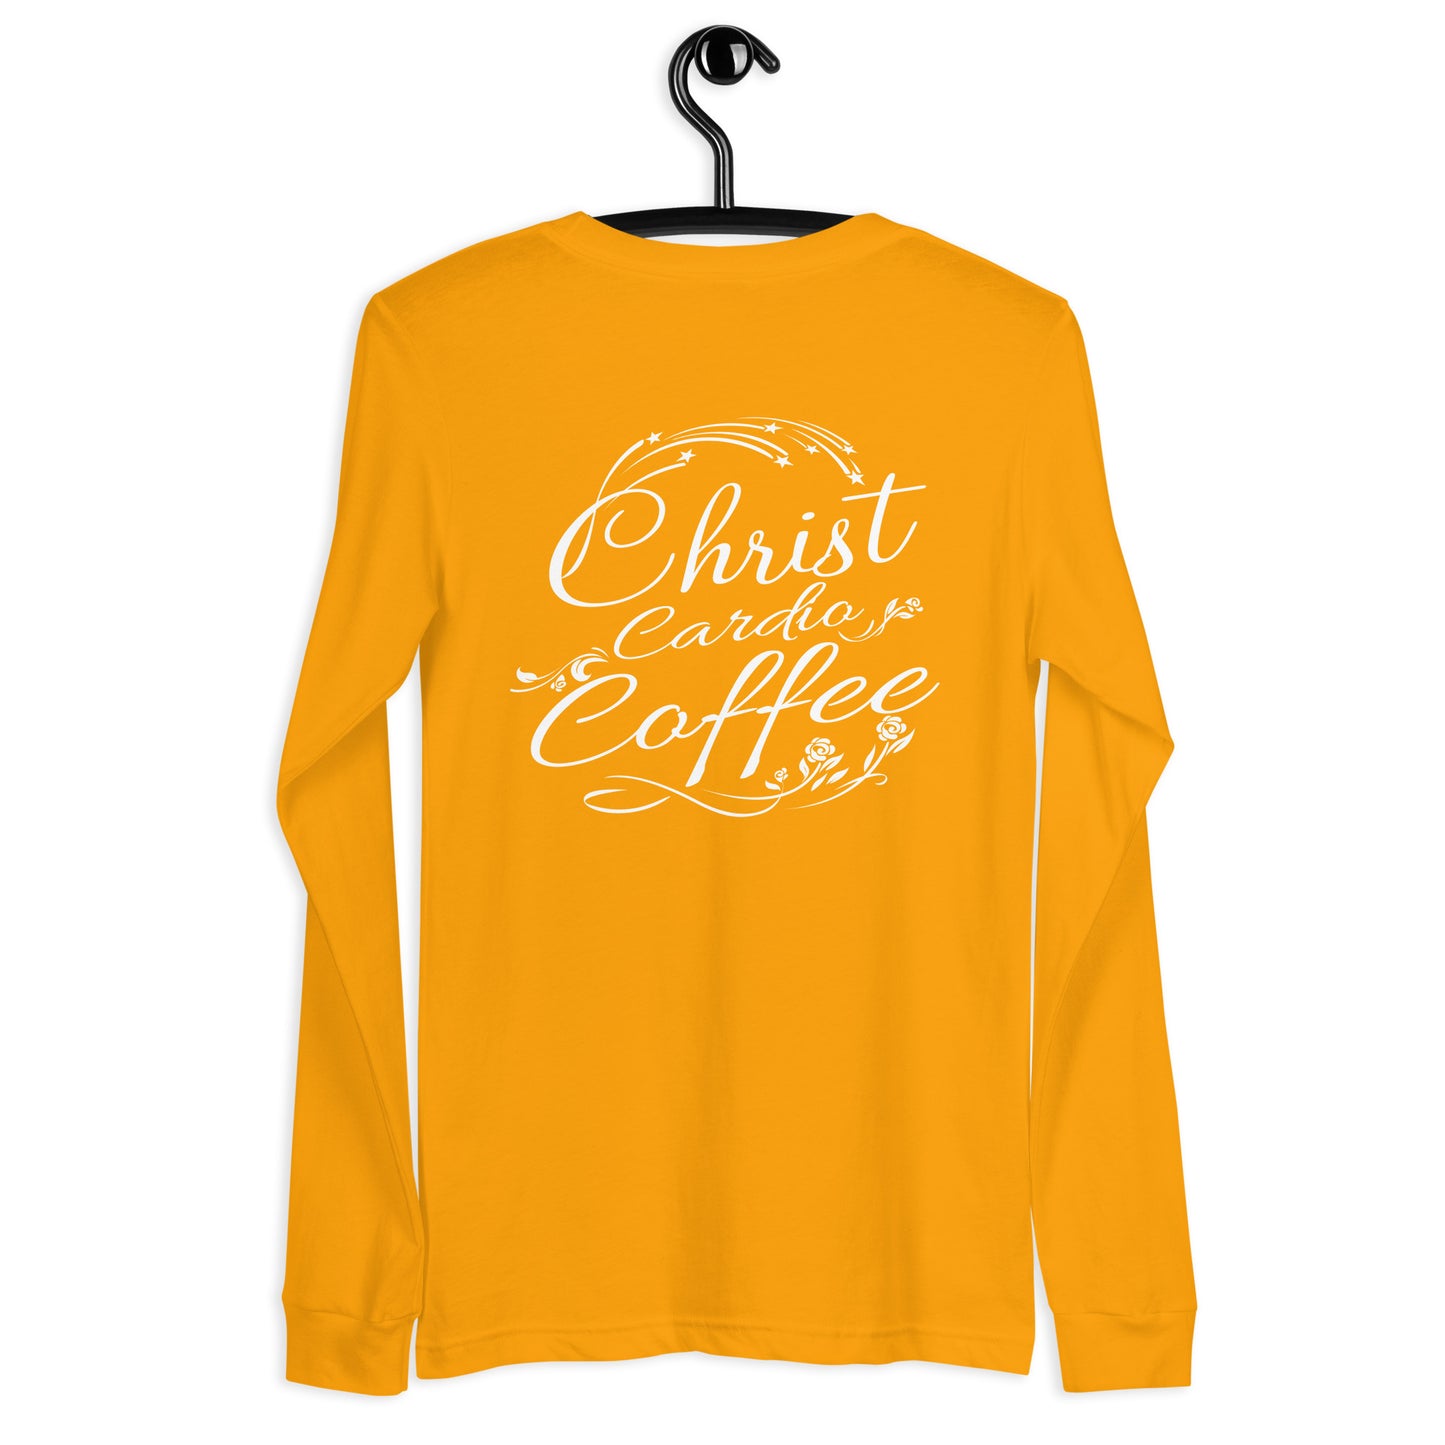 Christ Coffee Cardio - Unisex Long Sleeve Tee - View All Colors